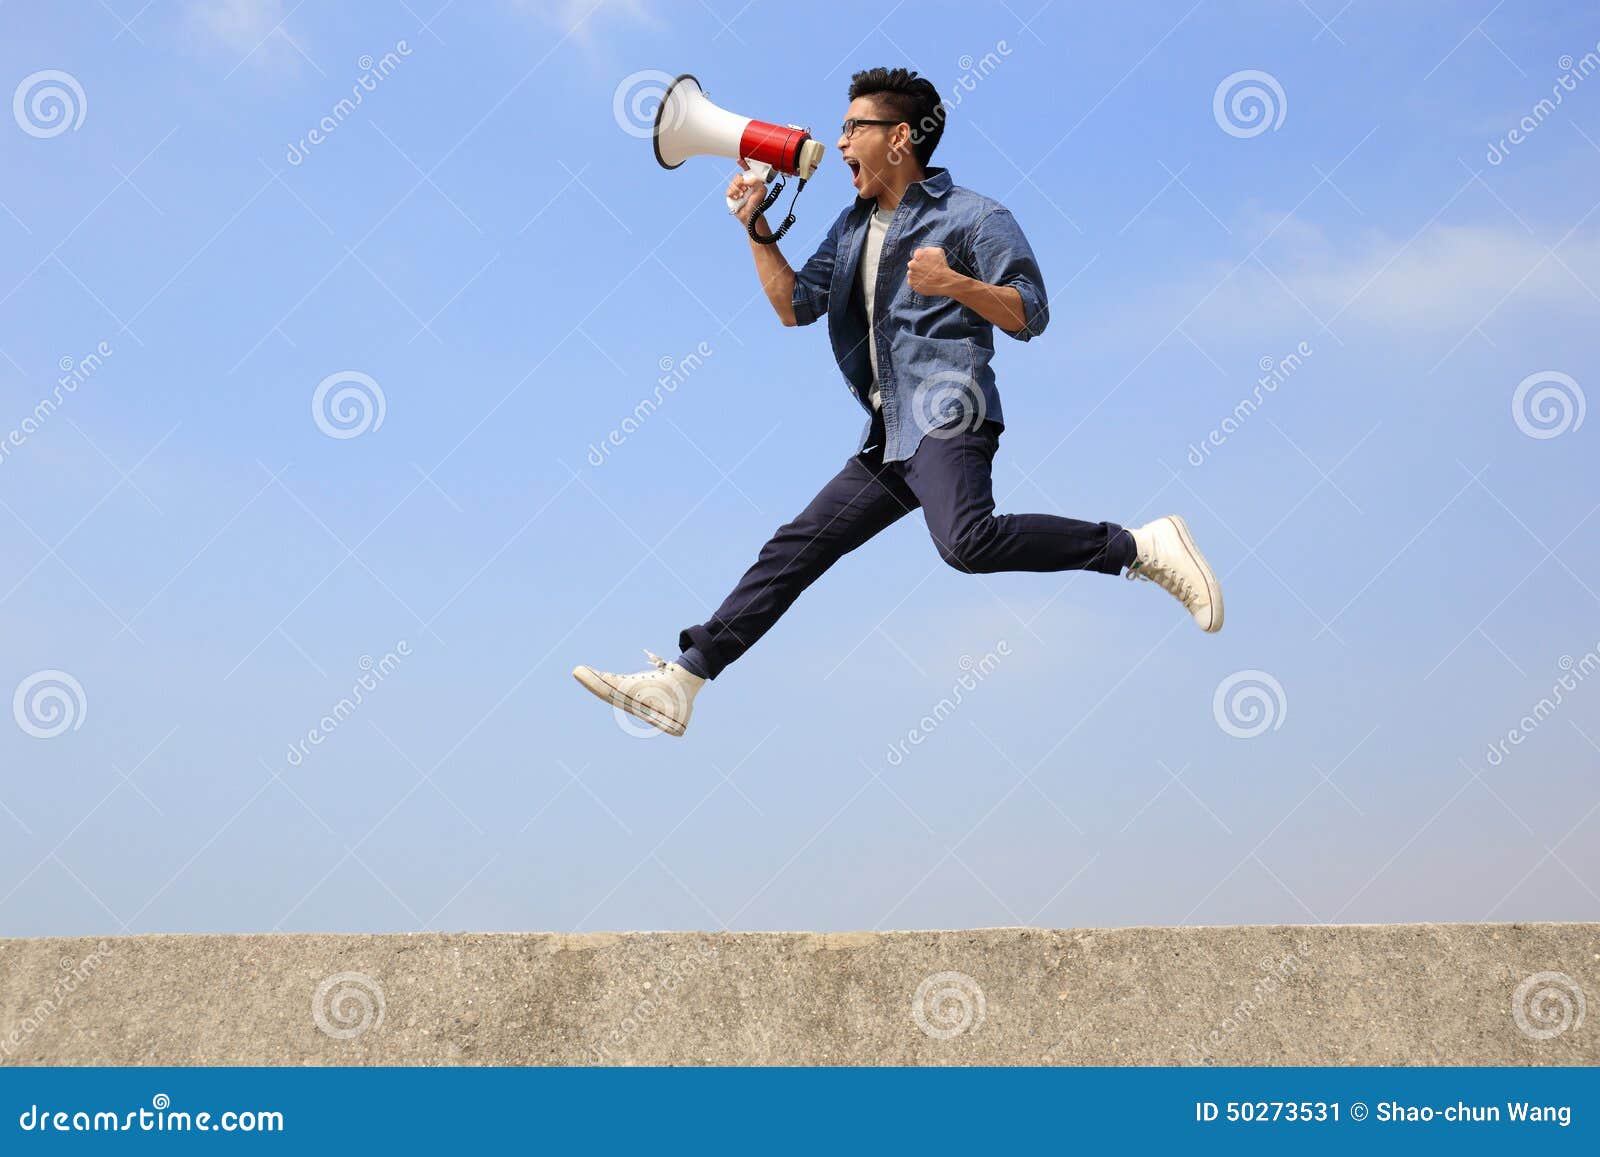 man jump and shout megaphone